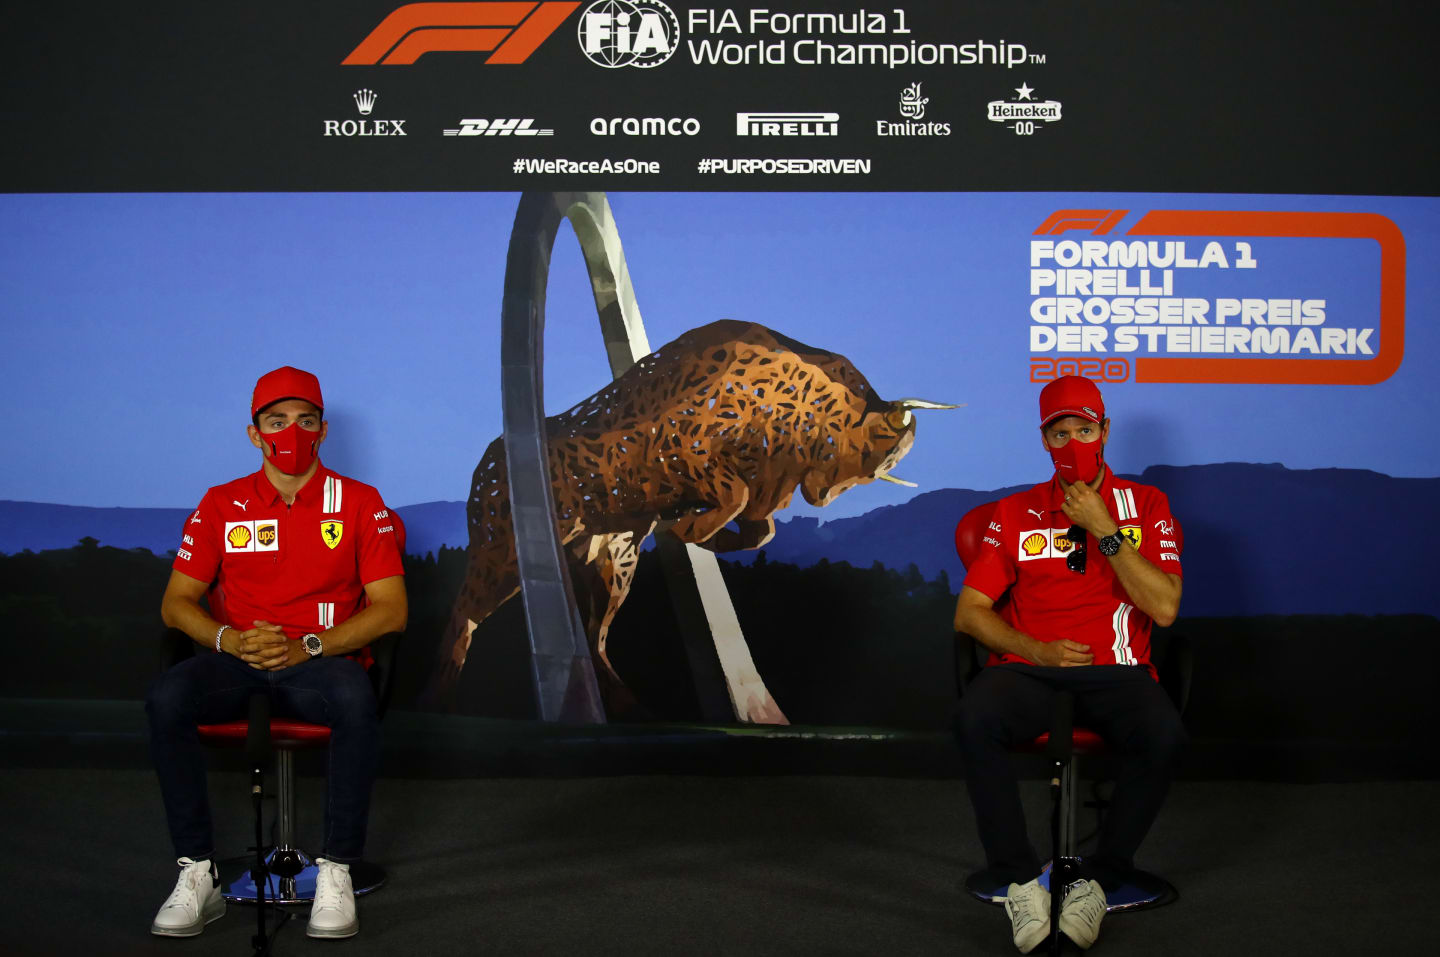 SPIELBERG, AUSTRIA - JULY 09: Charles Leclerc of Monaco and Ferrari and Sebastian Vettel of Germany